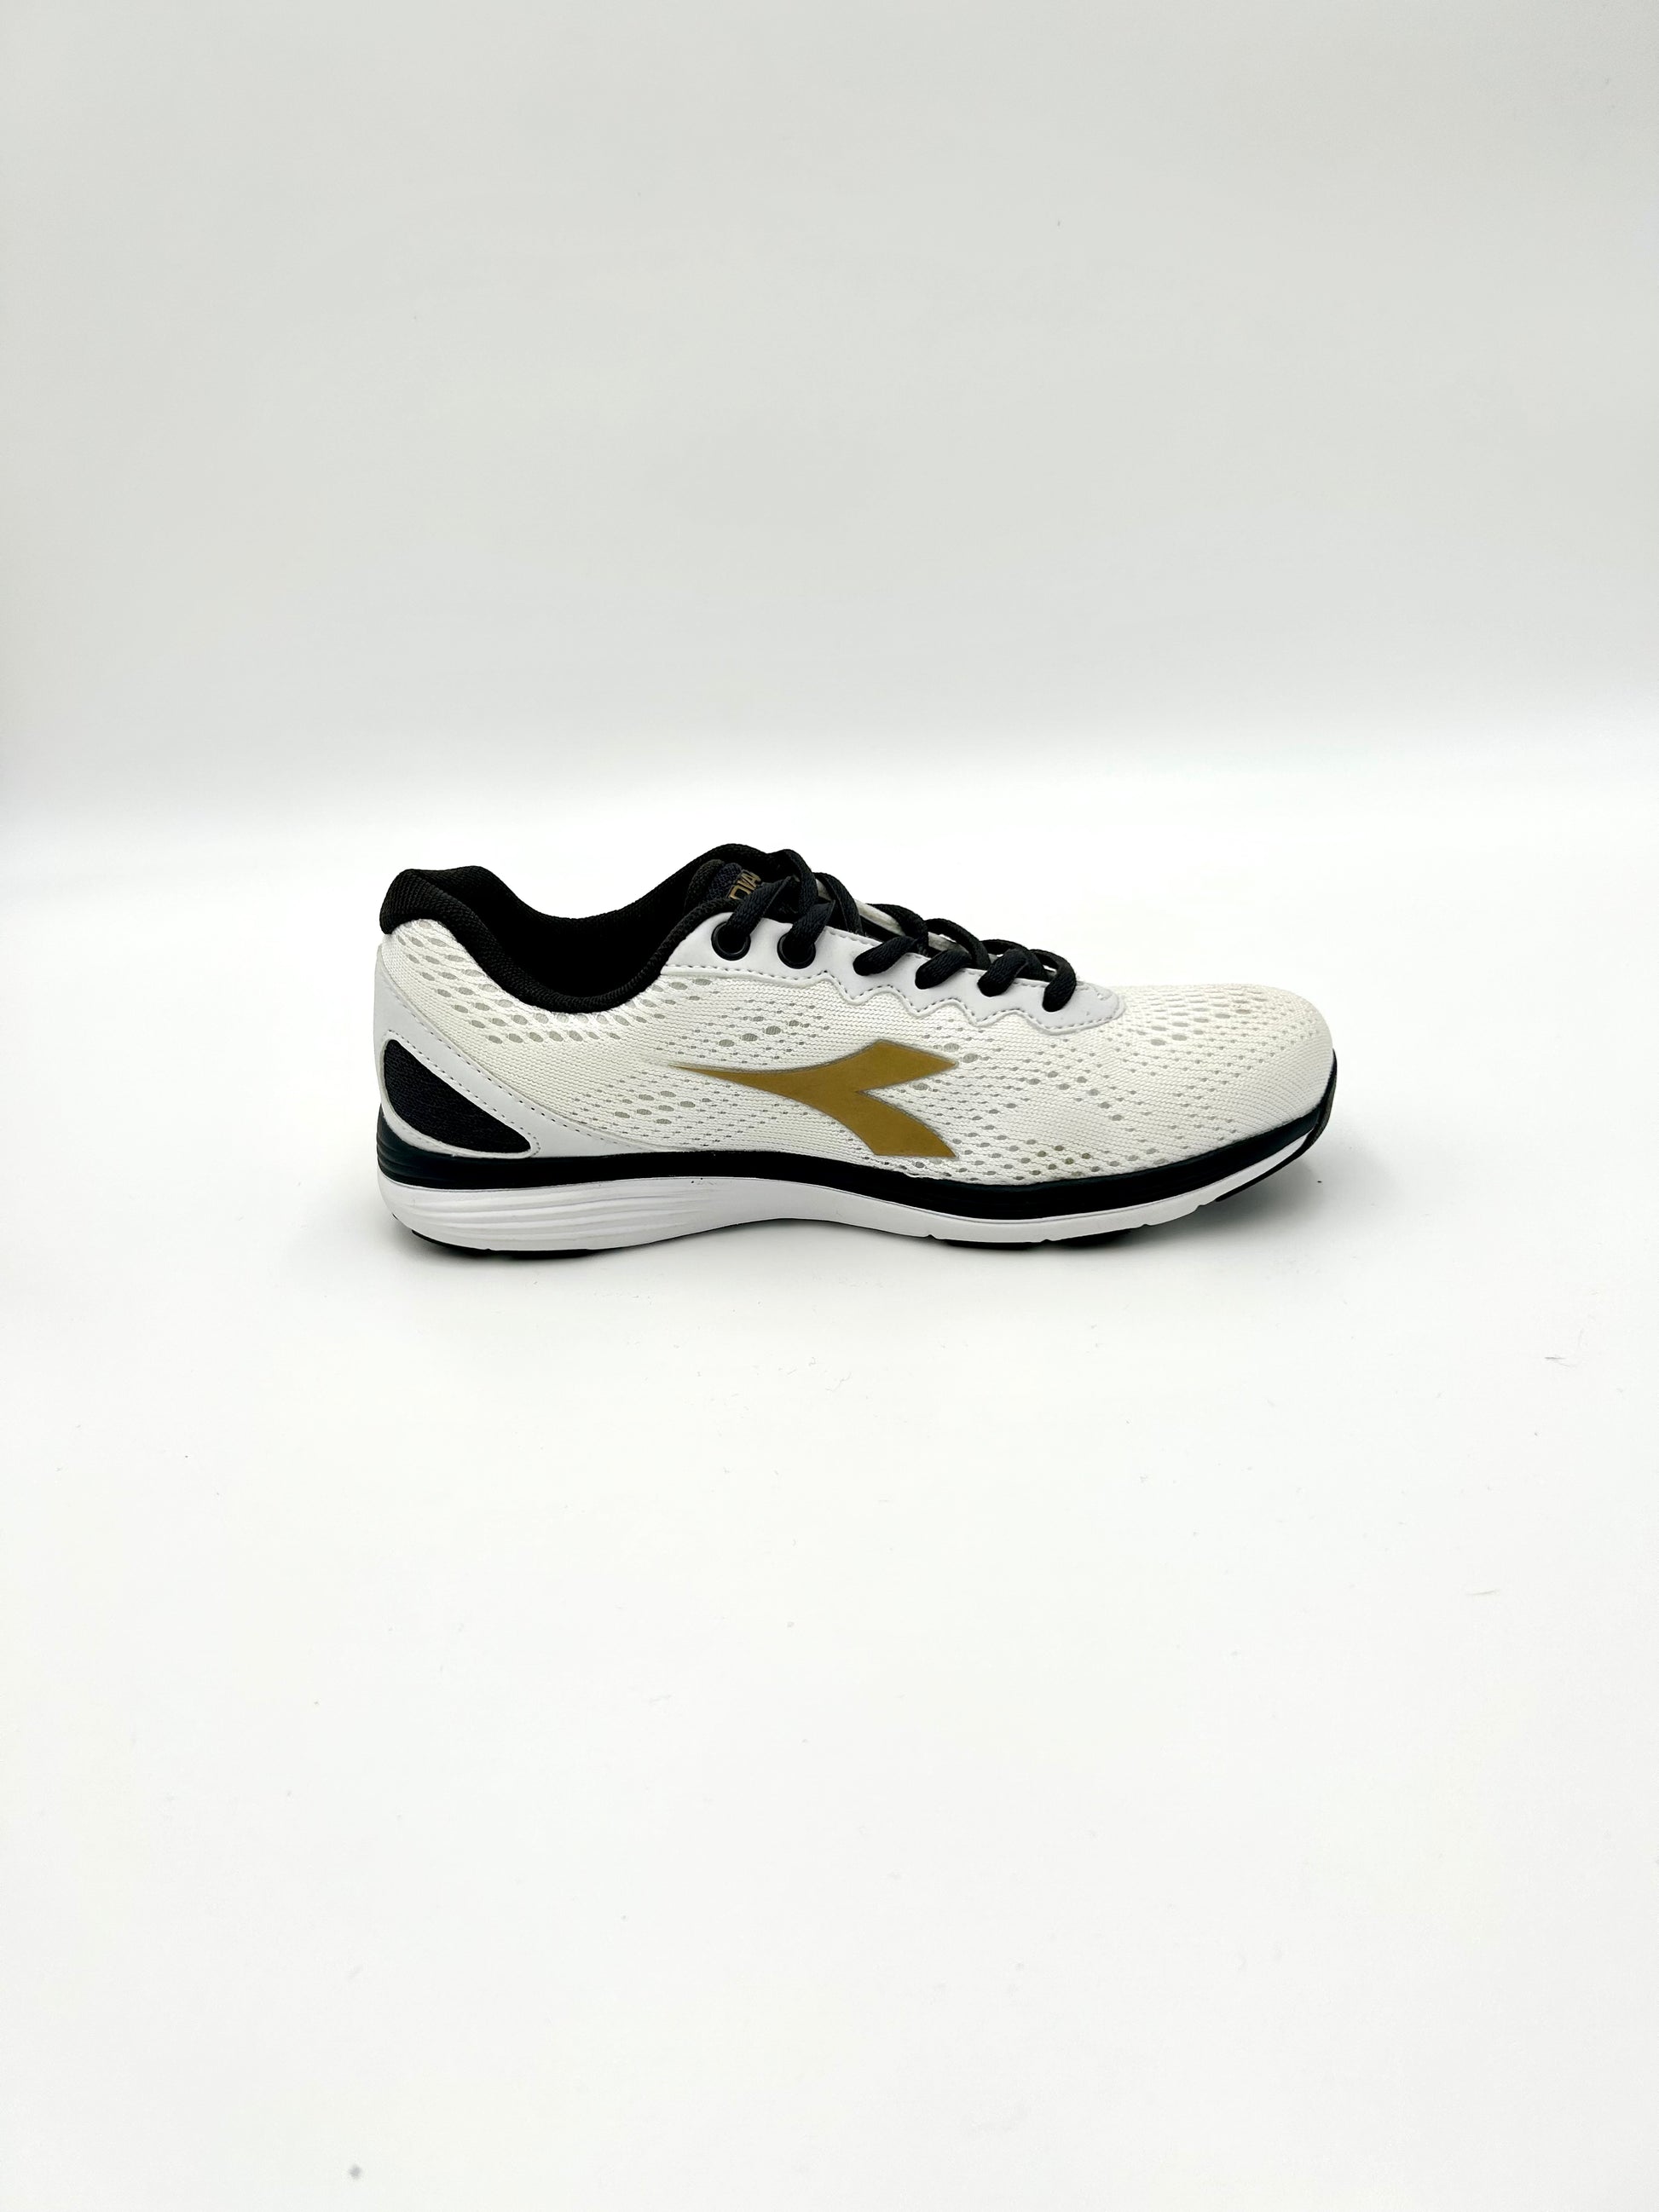 Diadora Sneakers Swan 2 W DD Comfort - white and gold - Diadora